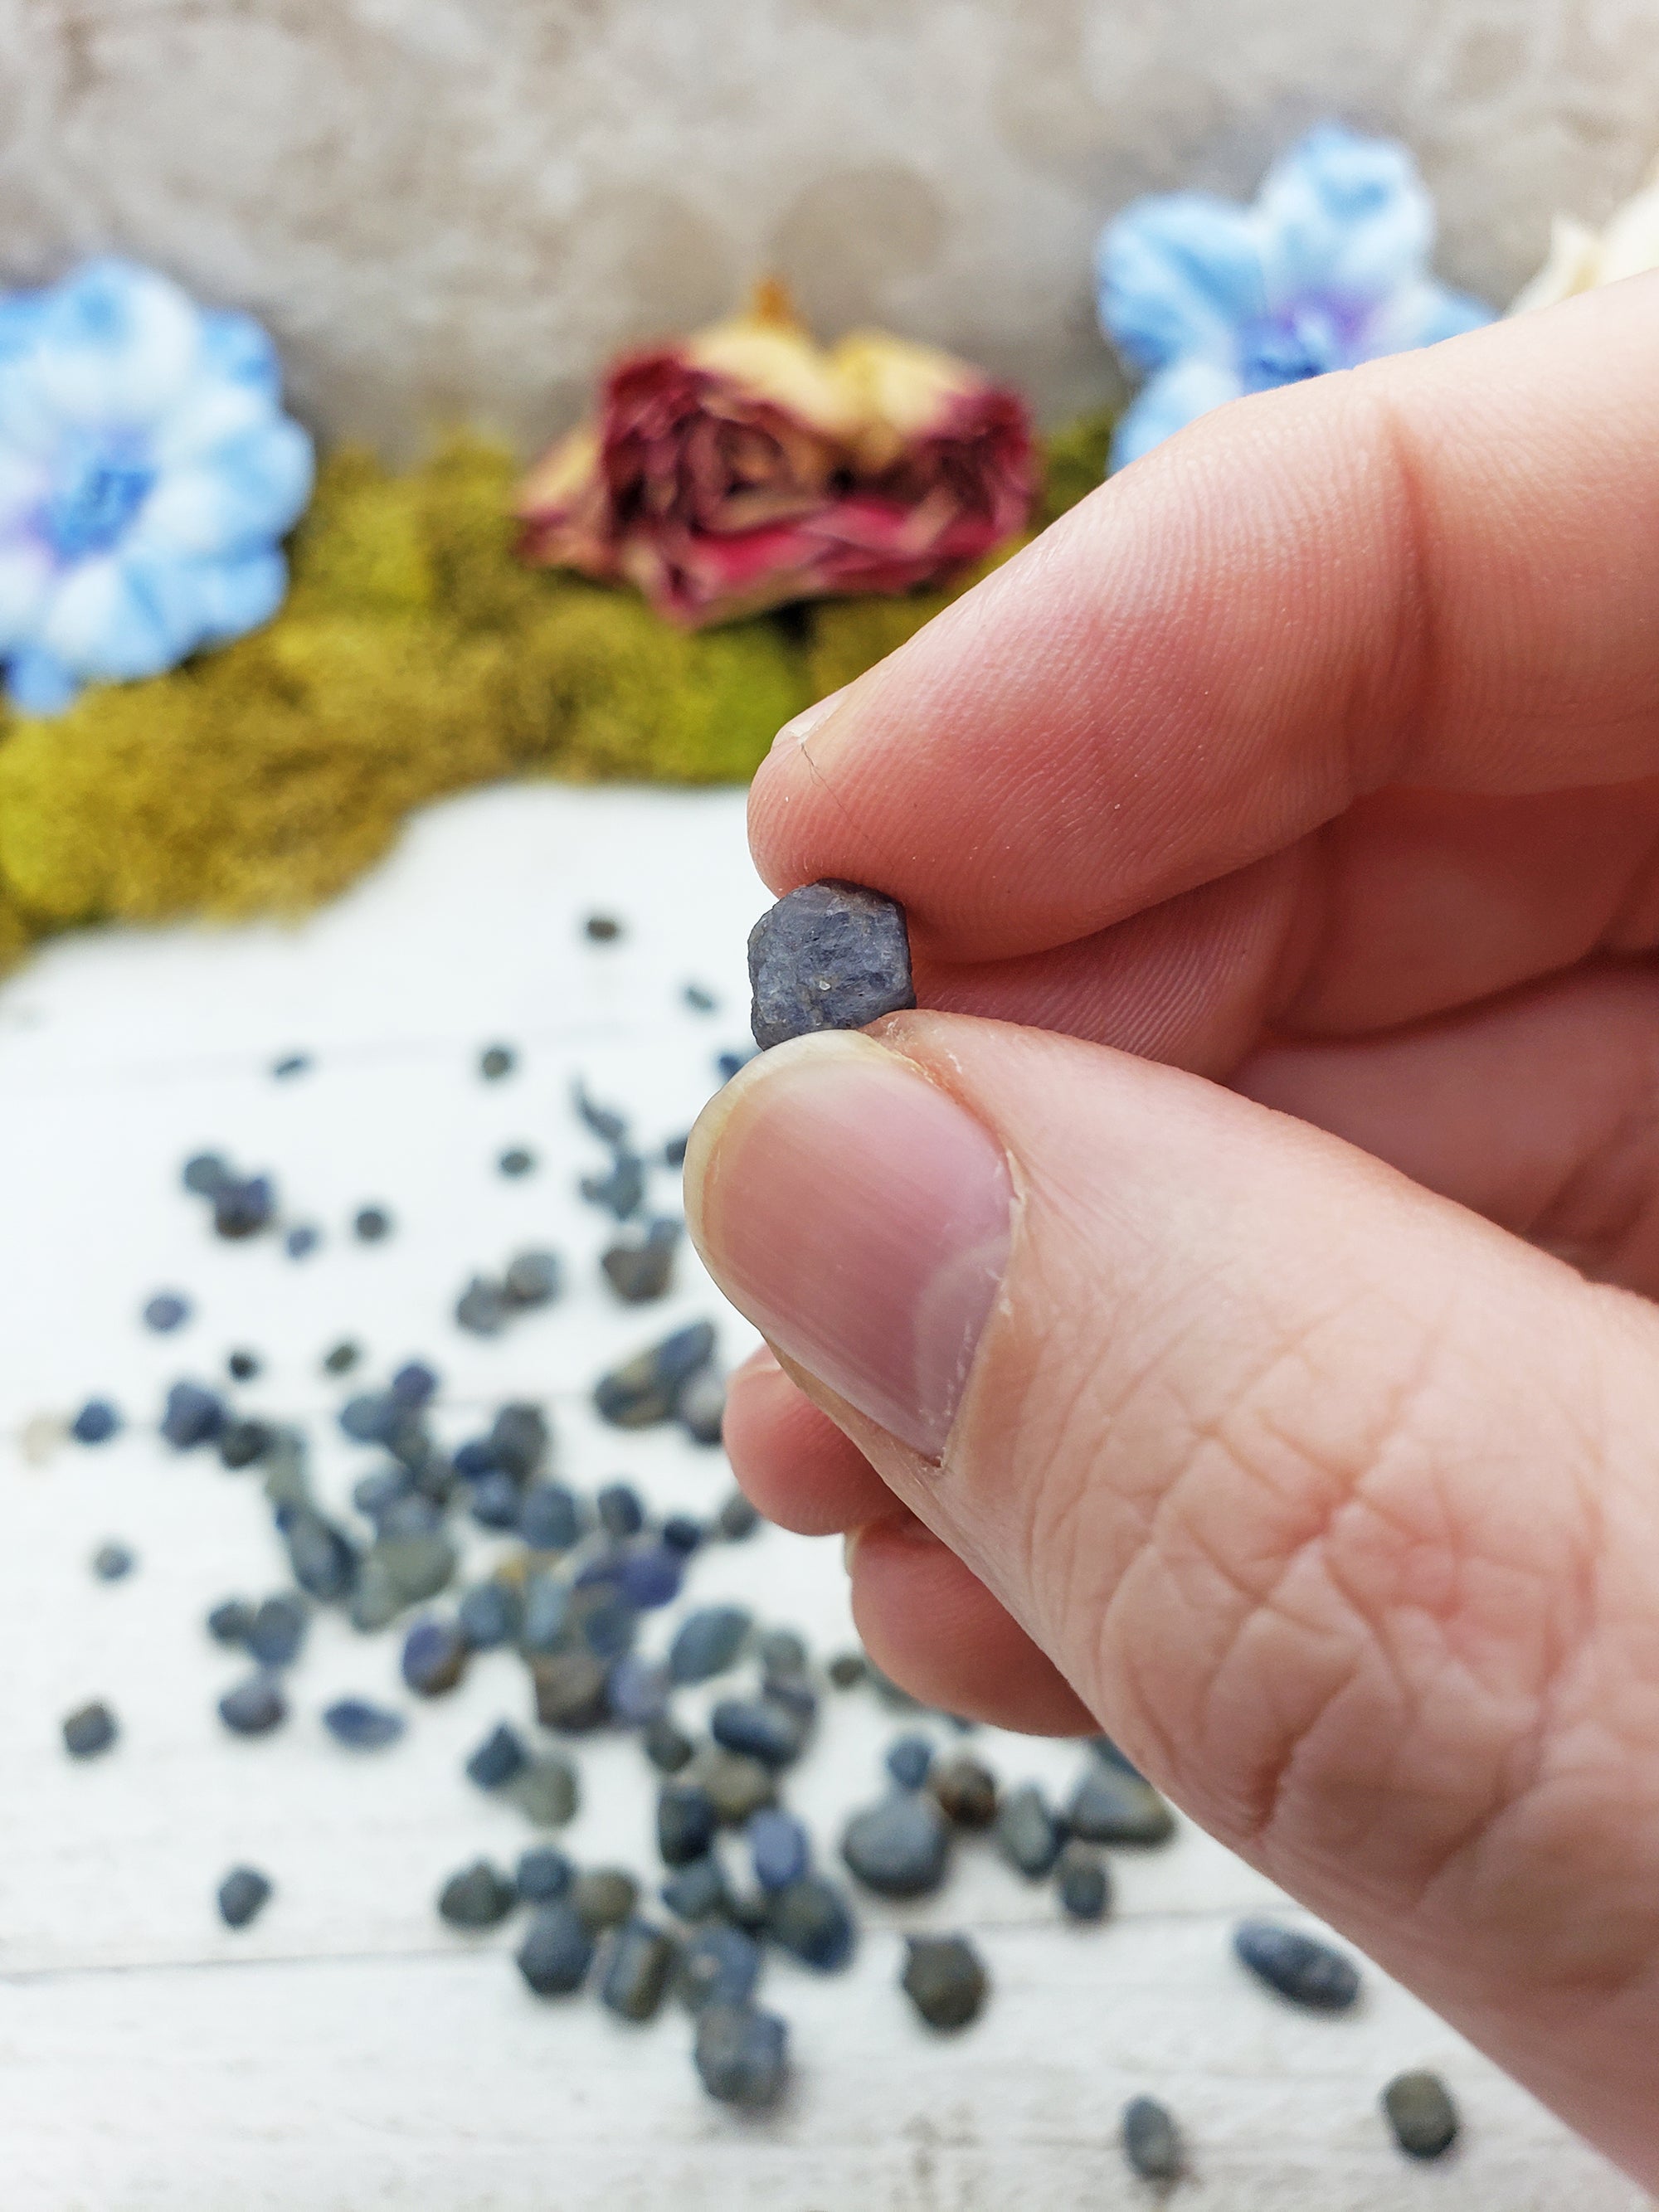 sapphire stone between fingers